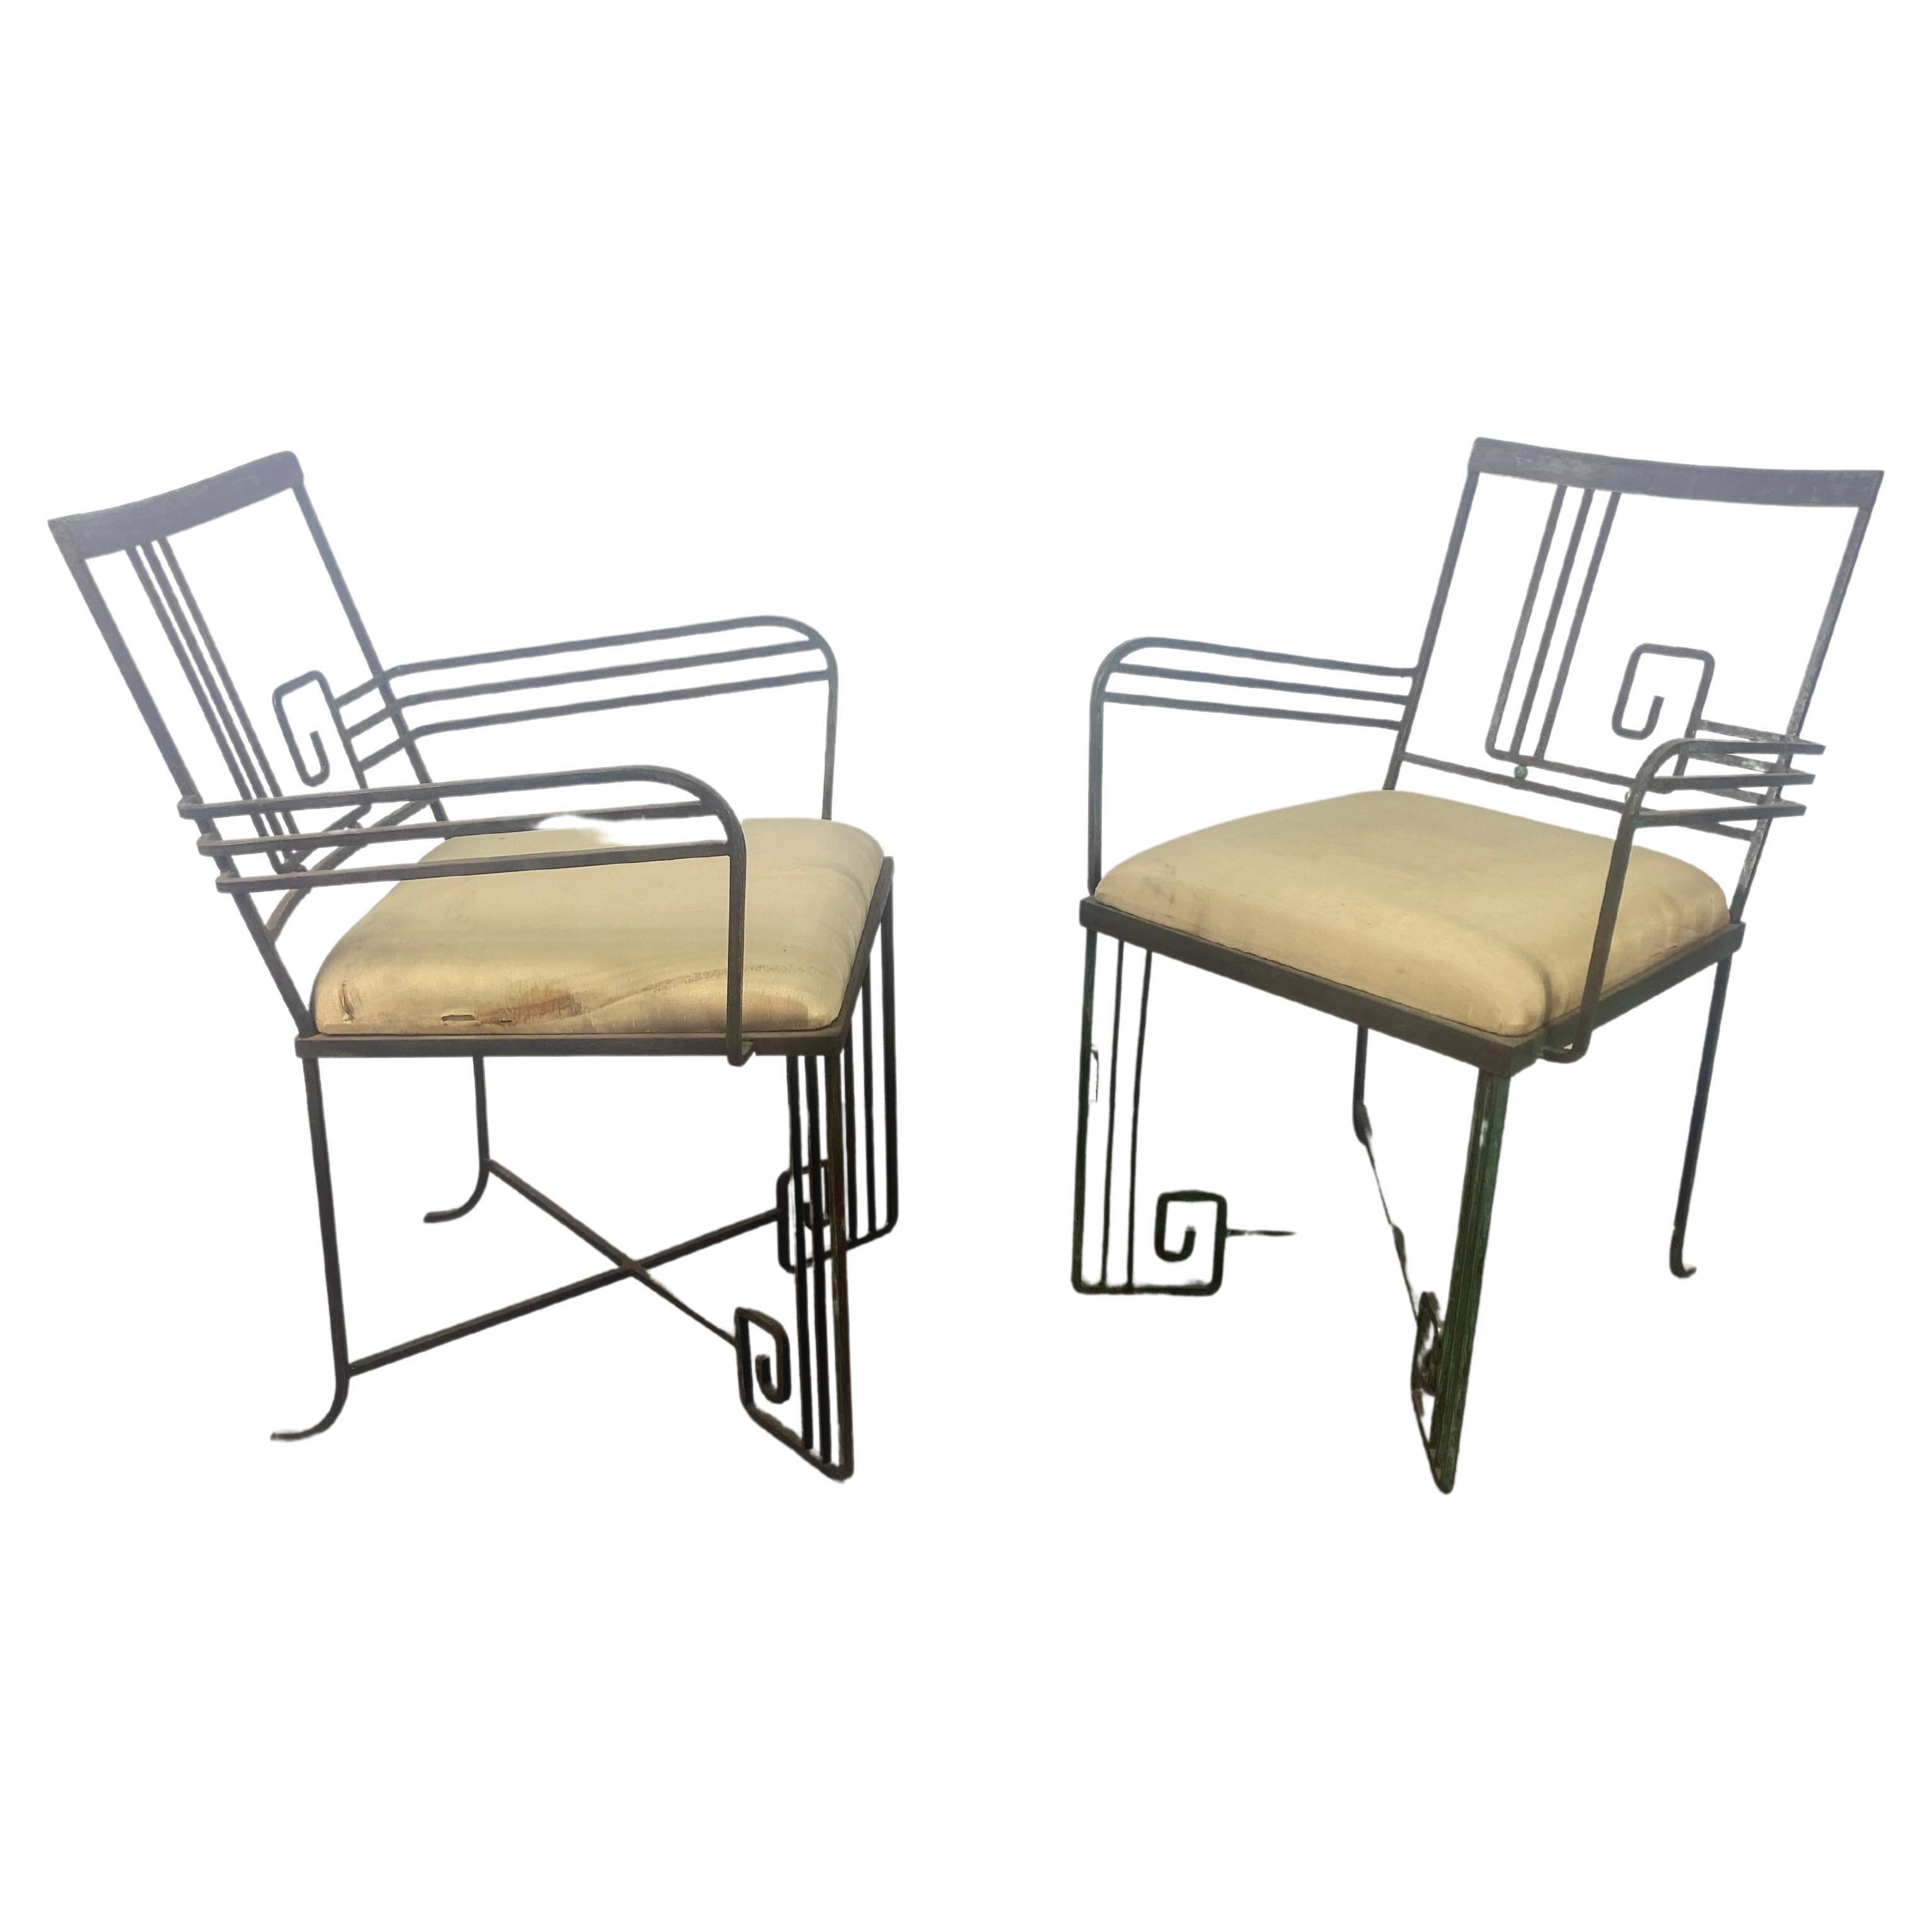 Biltmore' Stuhl aus Schmiedeeisen Marina McDonald's Jazzmöbel Art Deco